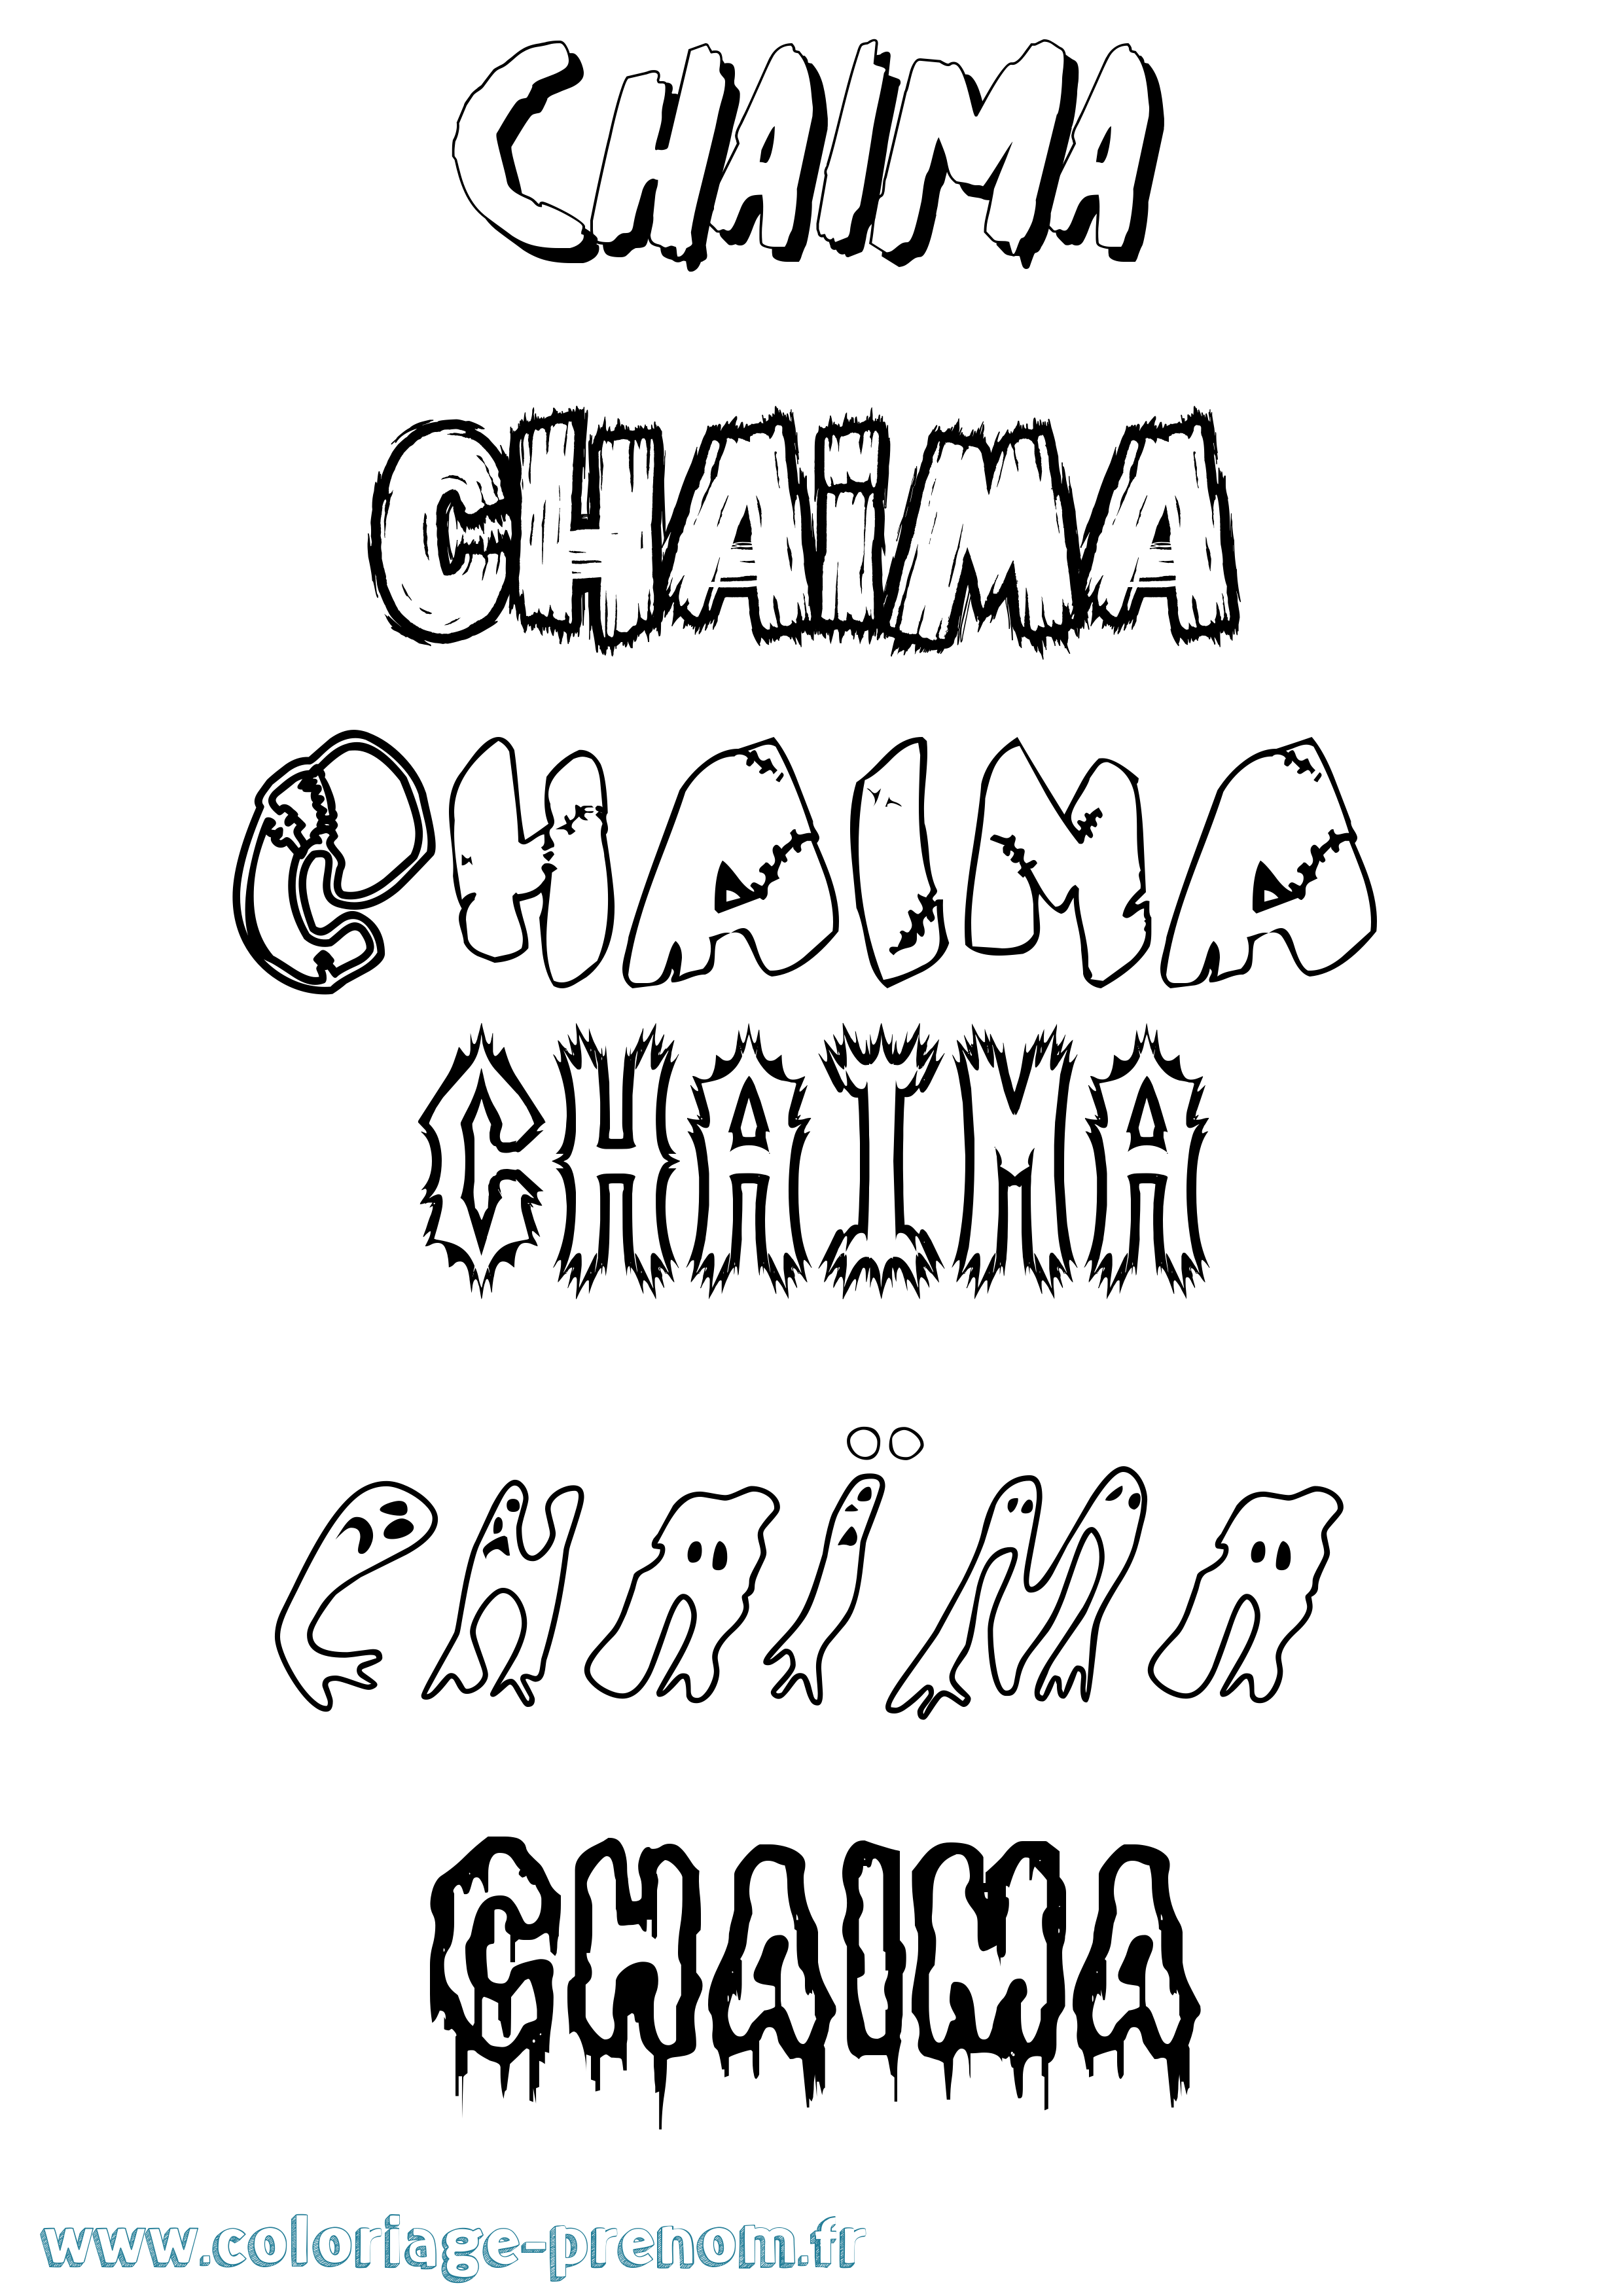 Coloriage prénom Chaïma